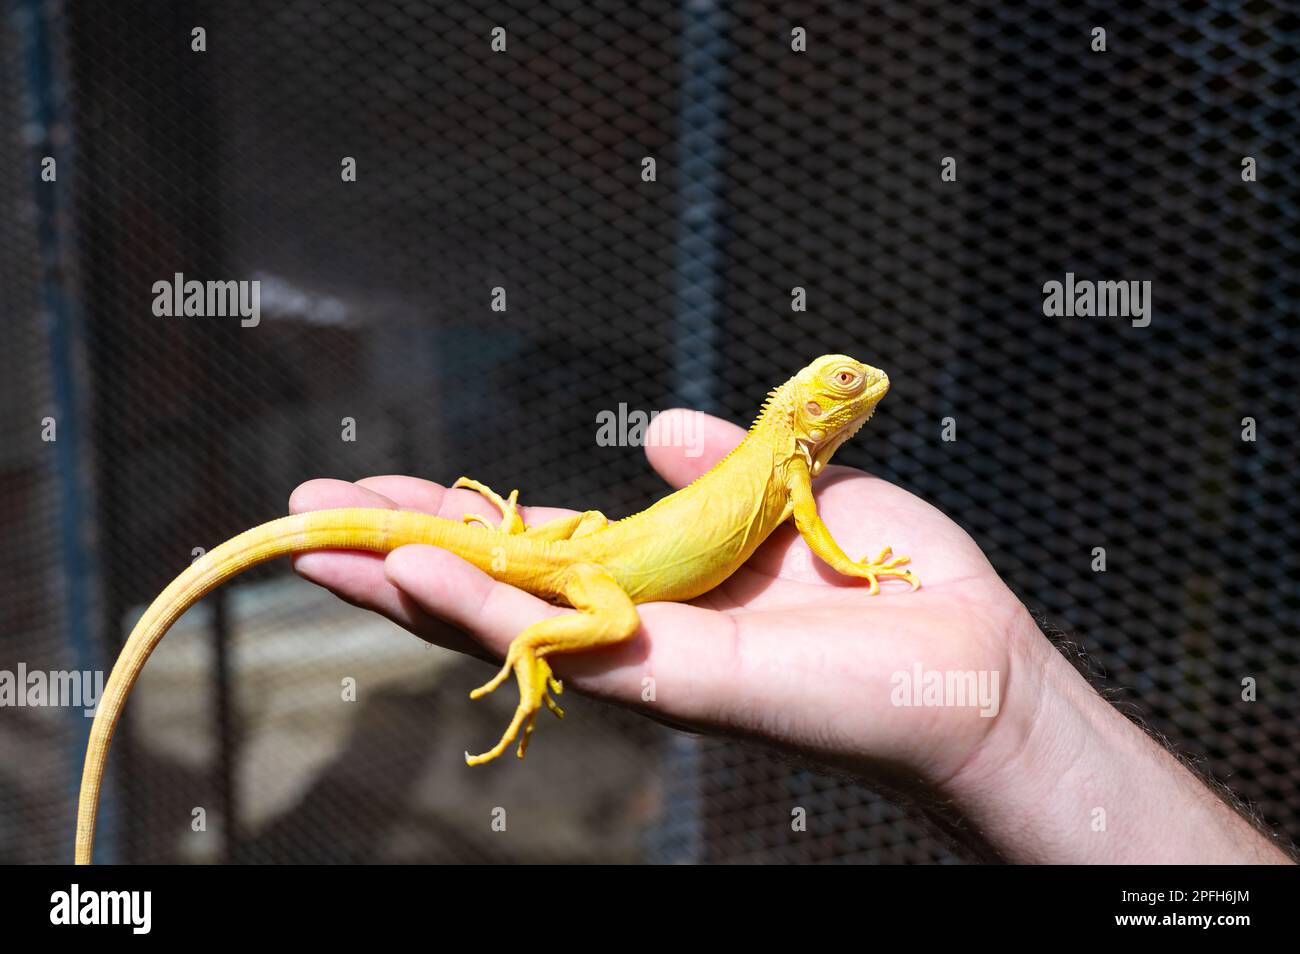 Yellow iguana is sitting on the hand. Stock Photo